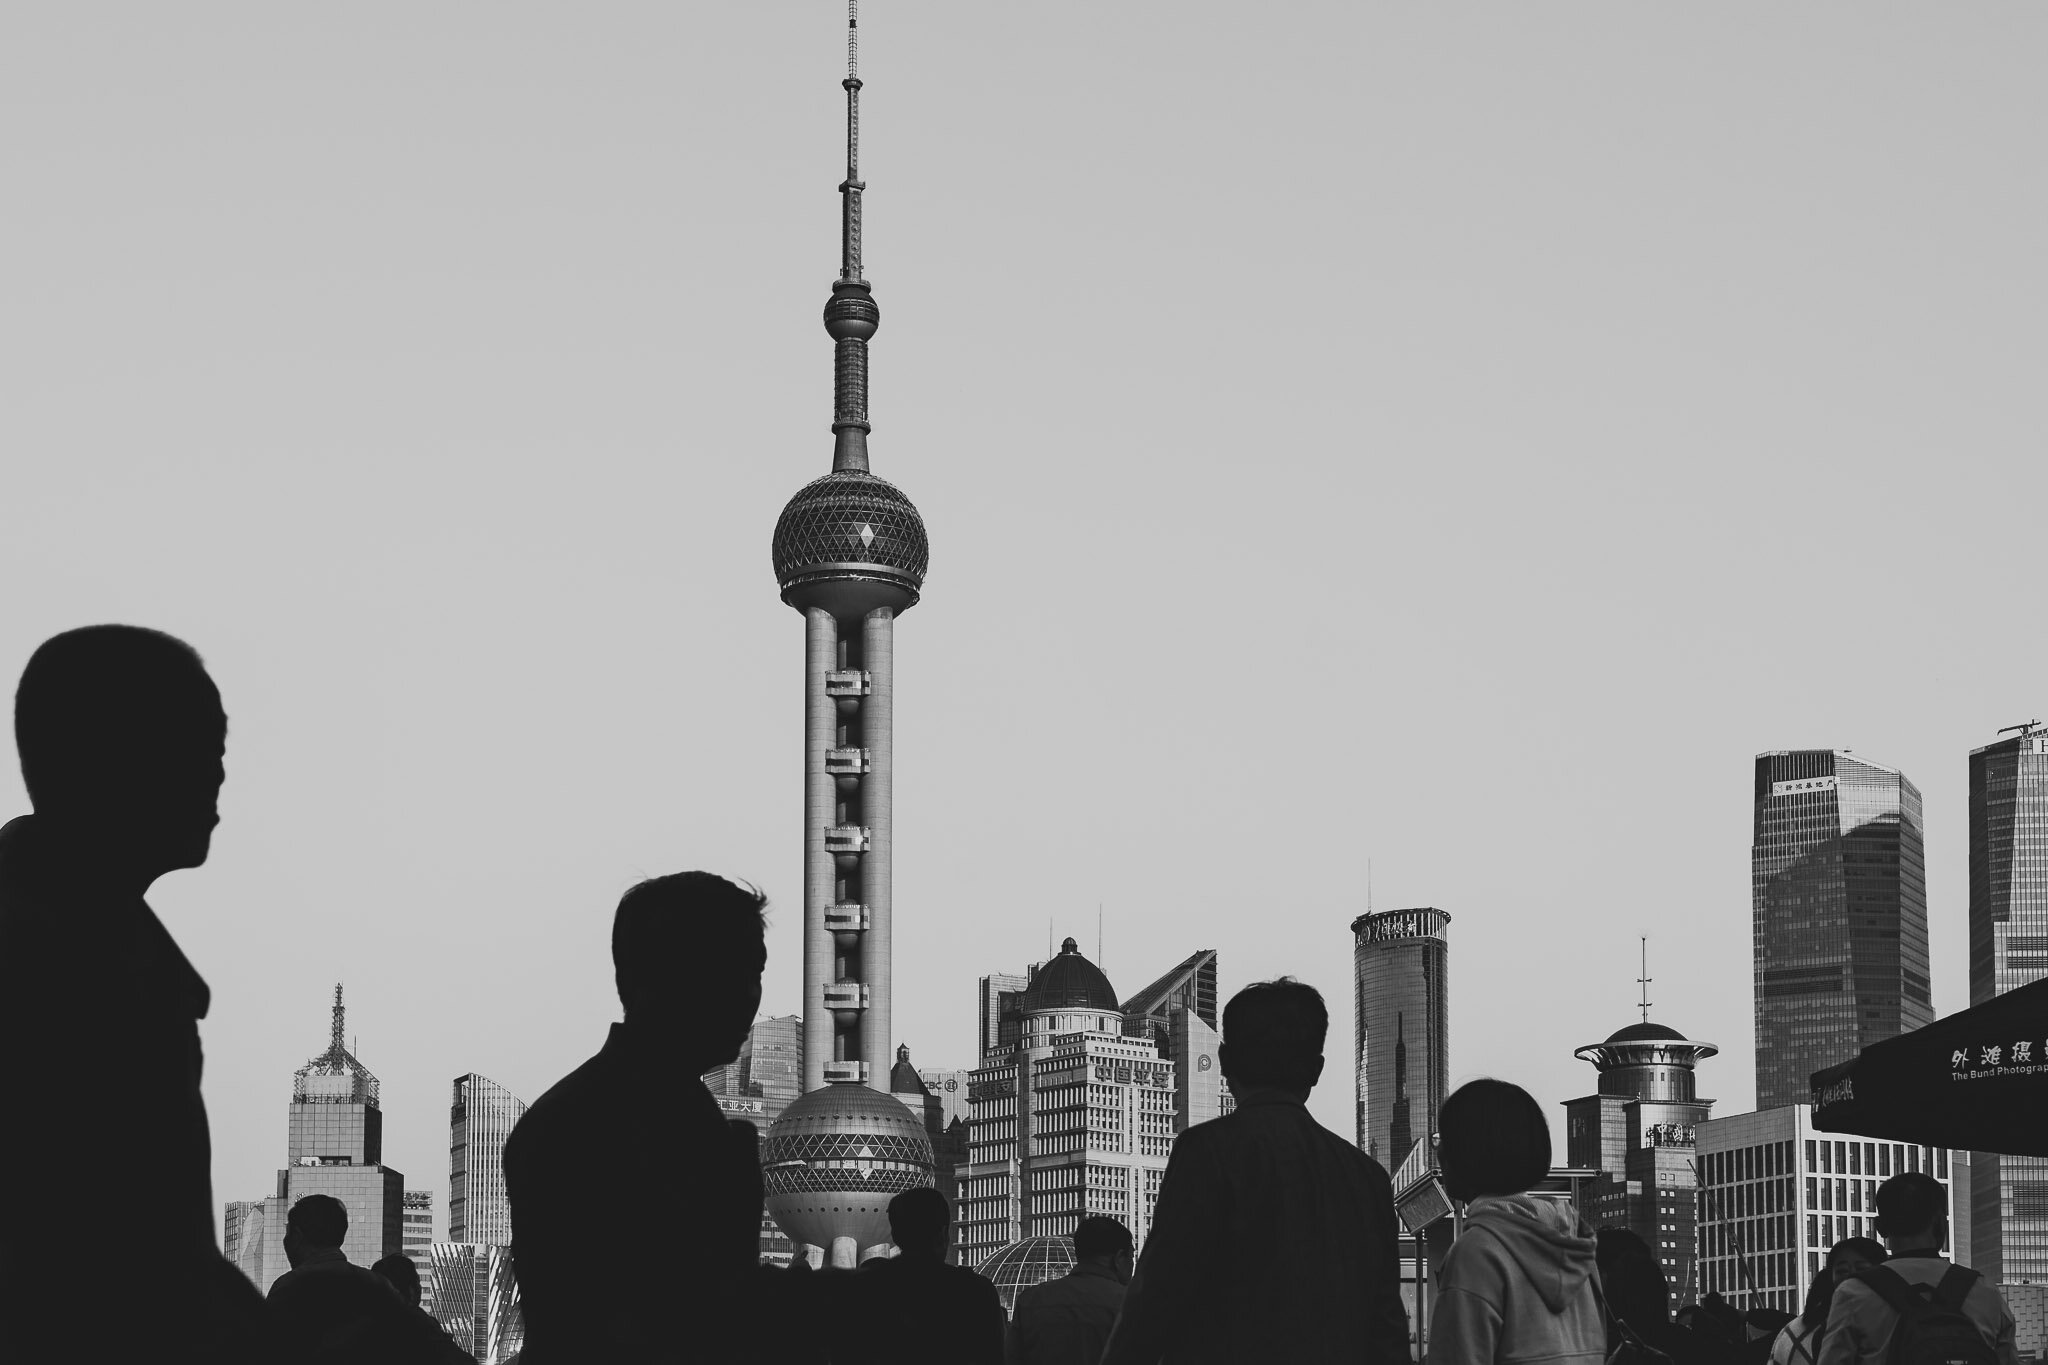 Shanghai 2020 Website28.jpg